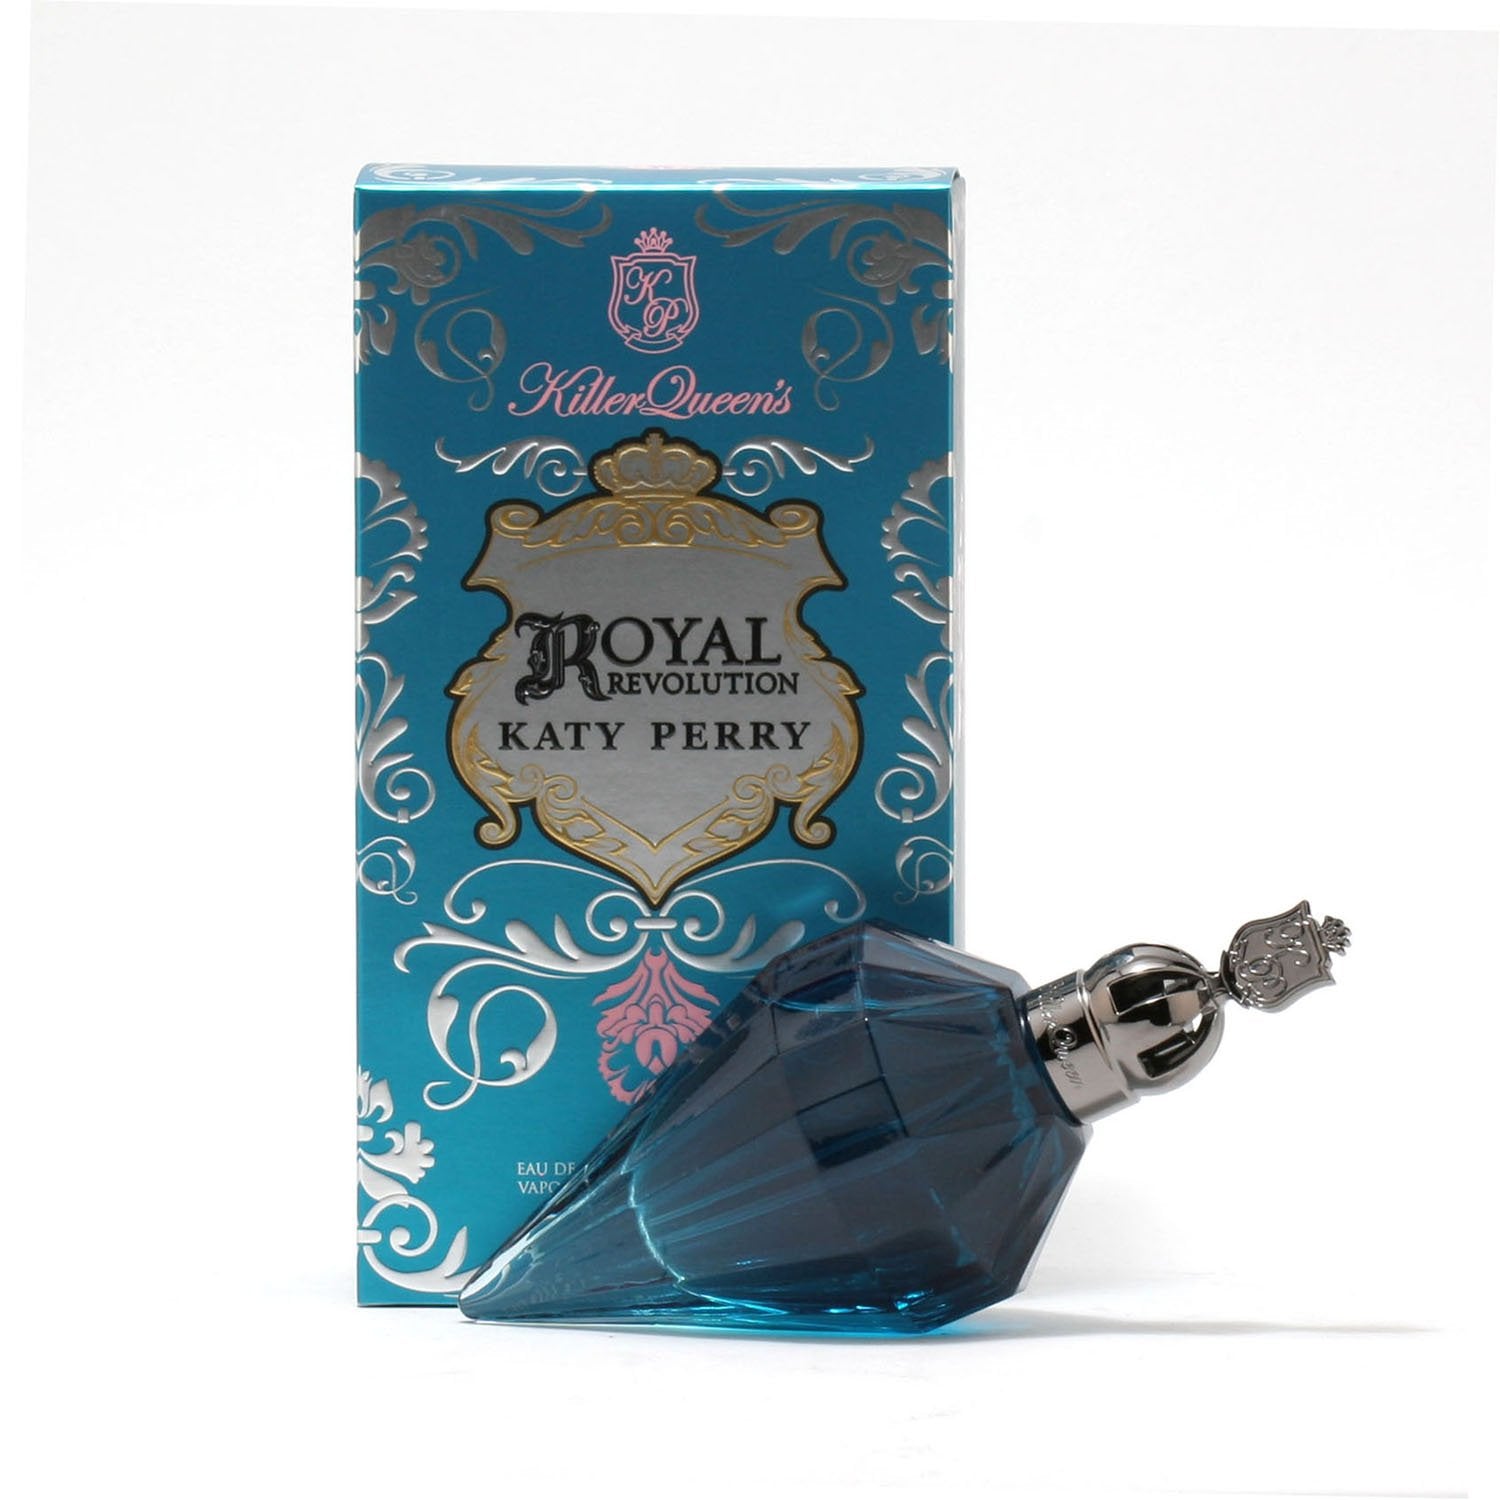 Perfume - KATY PERRY ROYAL REVOLUTION FOR WOMEN - EAU DE PARFUM SPRAY, 3.4 OZ